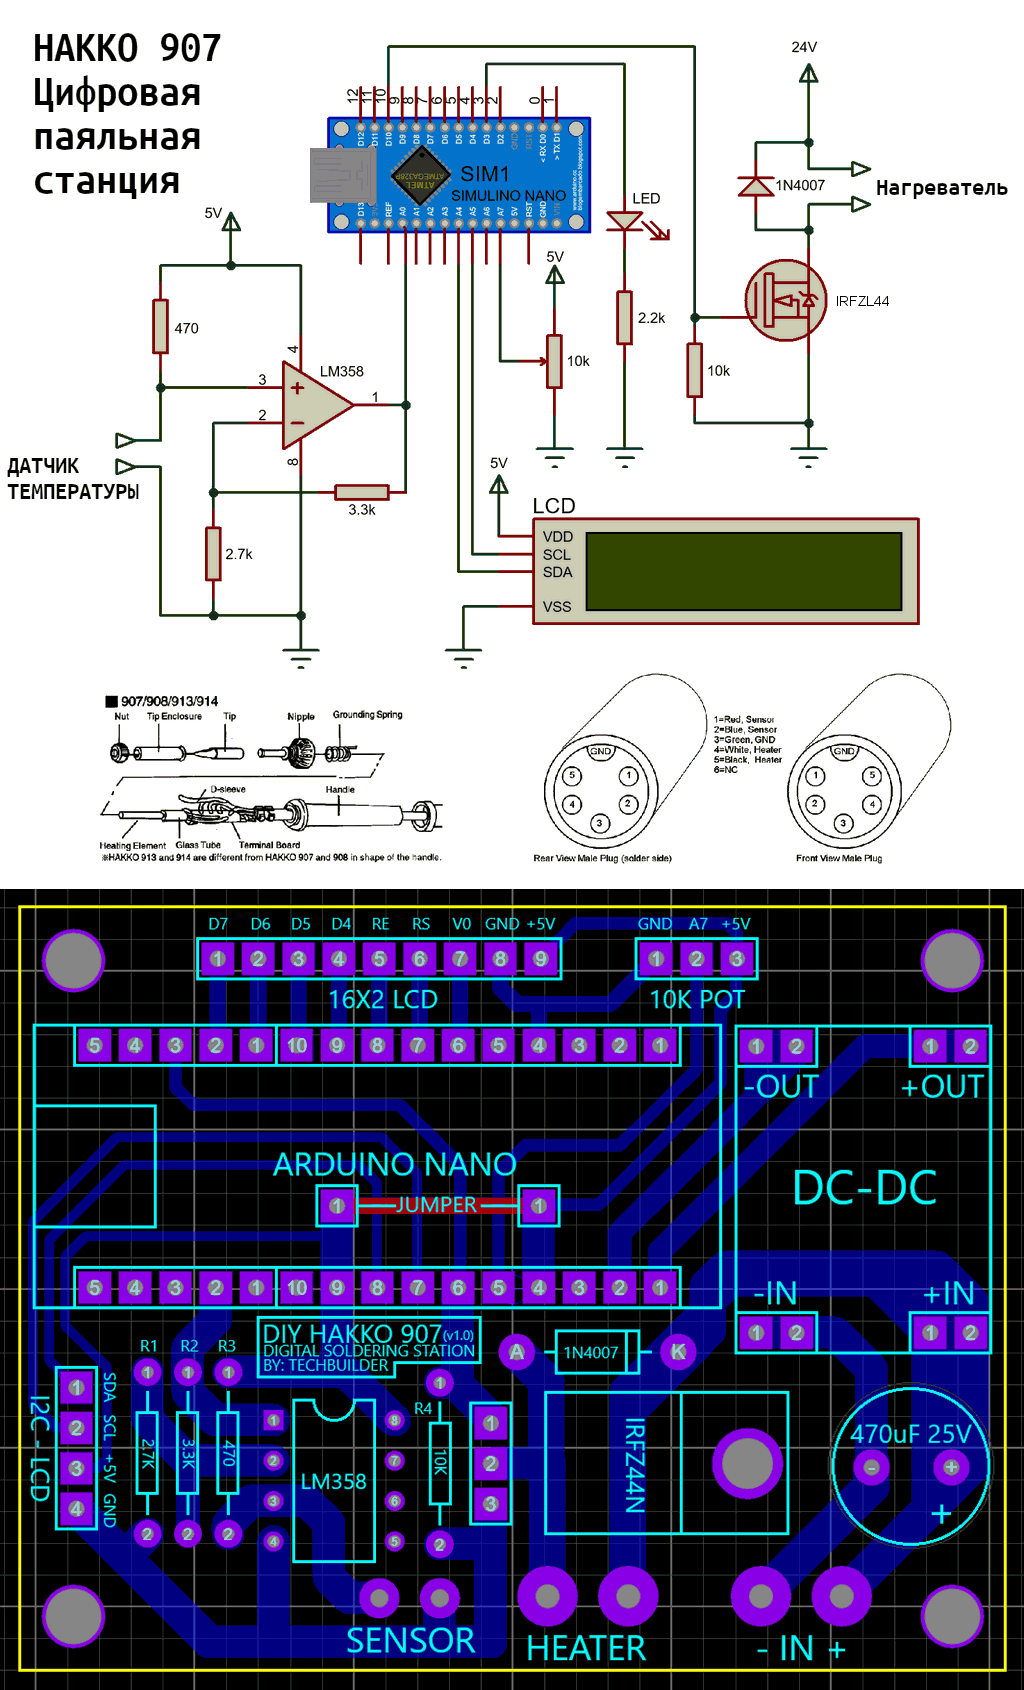 schematic-simple-digital-soldering-station-19v-18v-hakko-907-arduino-nano